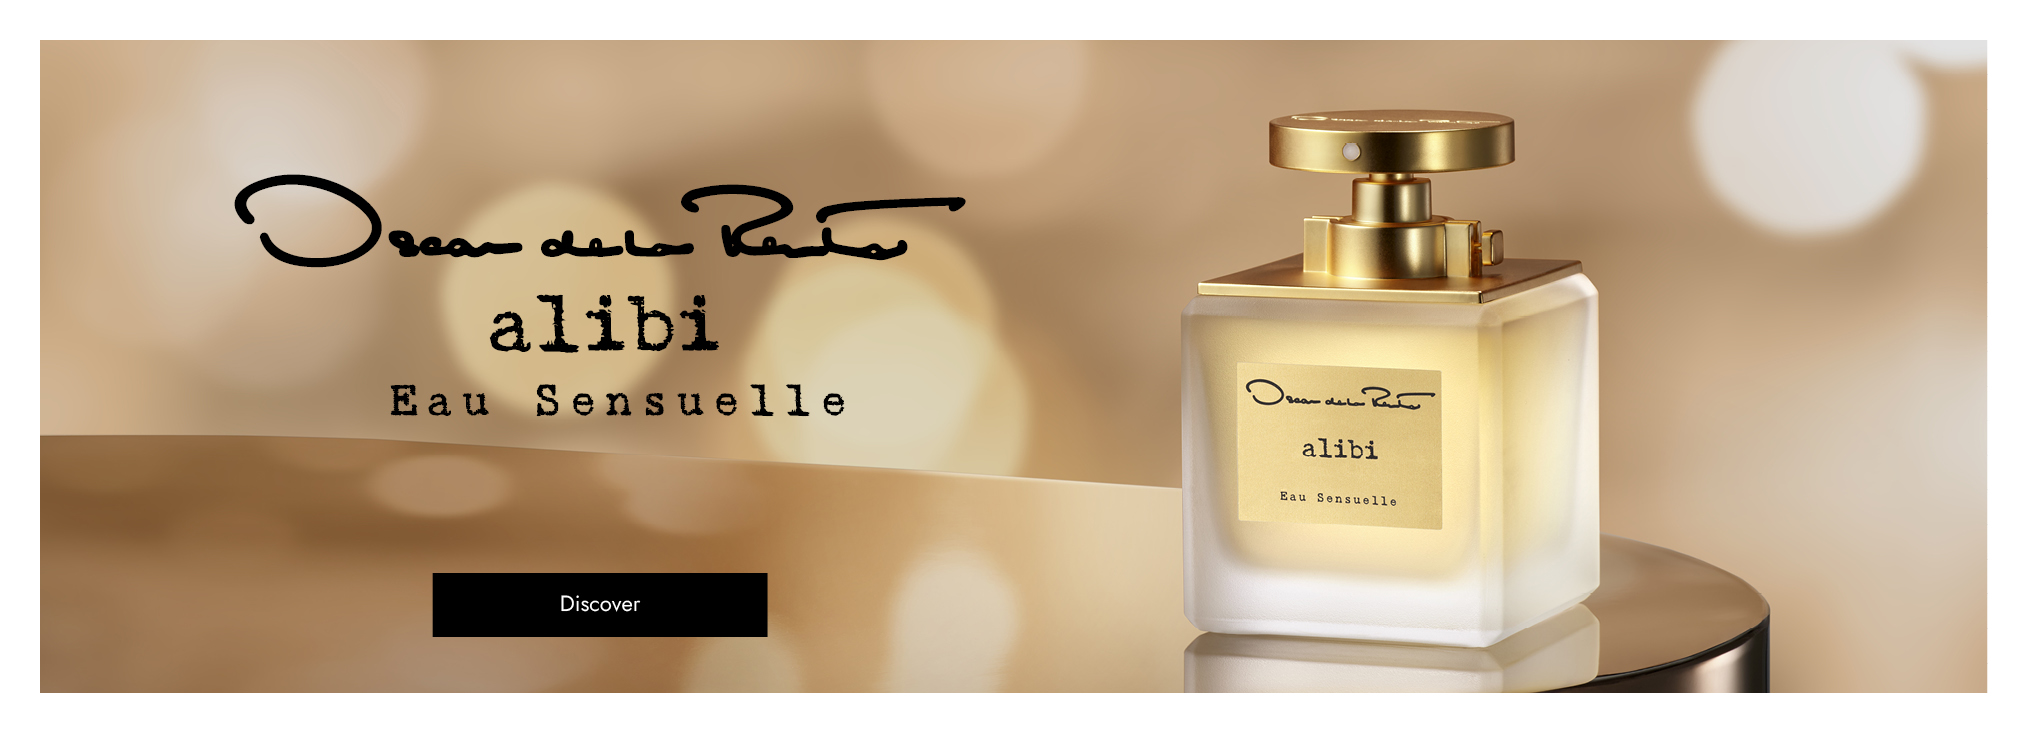 Oscar de la Renta_women perfumes